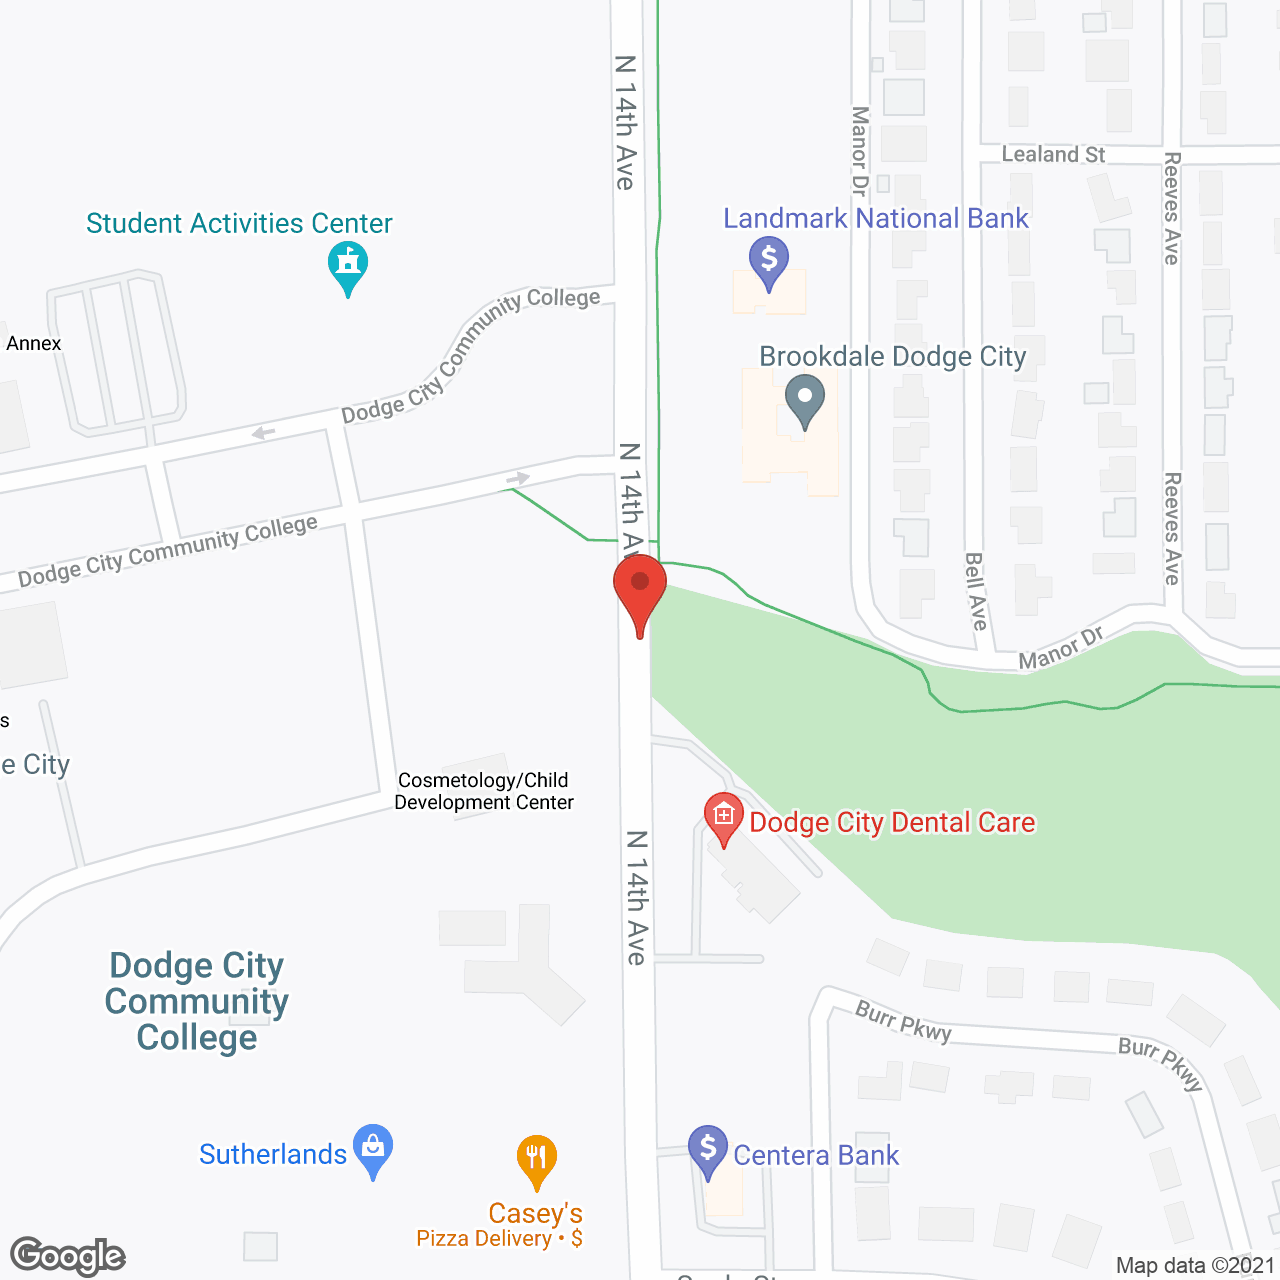 Brookdale Dodge City in google map